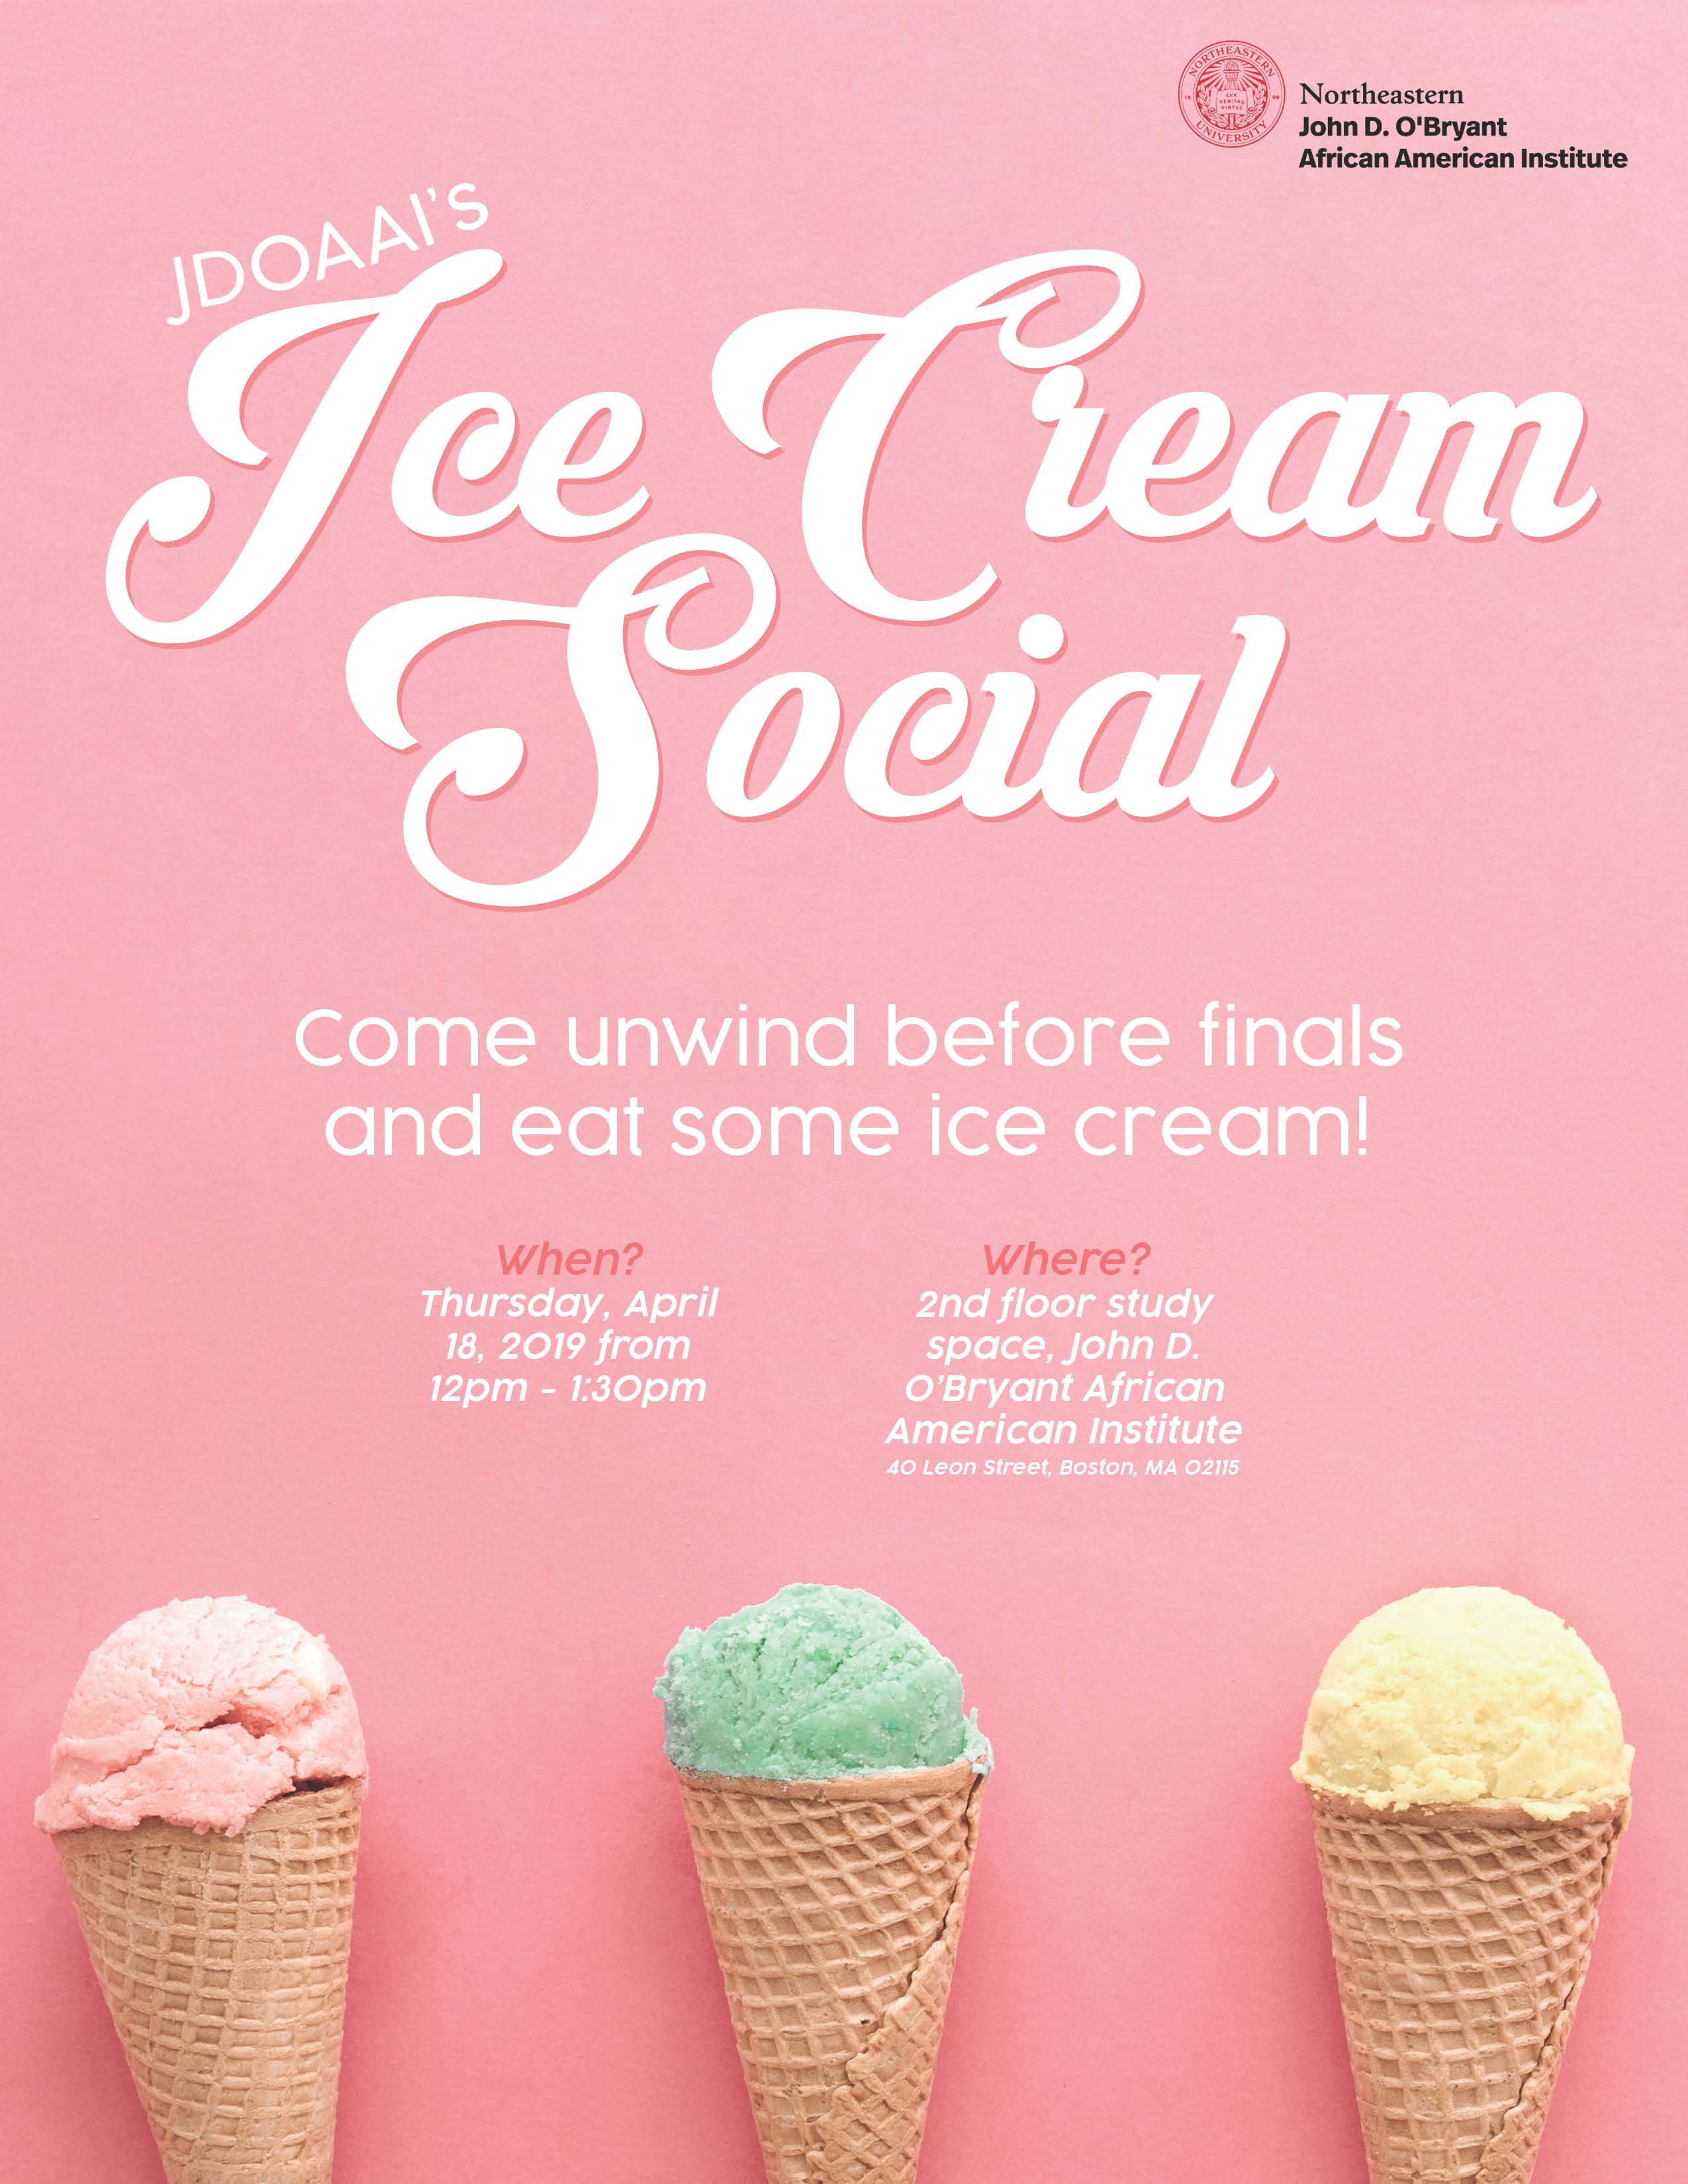 JDOAAI’s Ice Cream Social | African American Institute